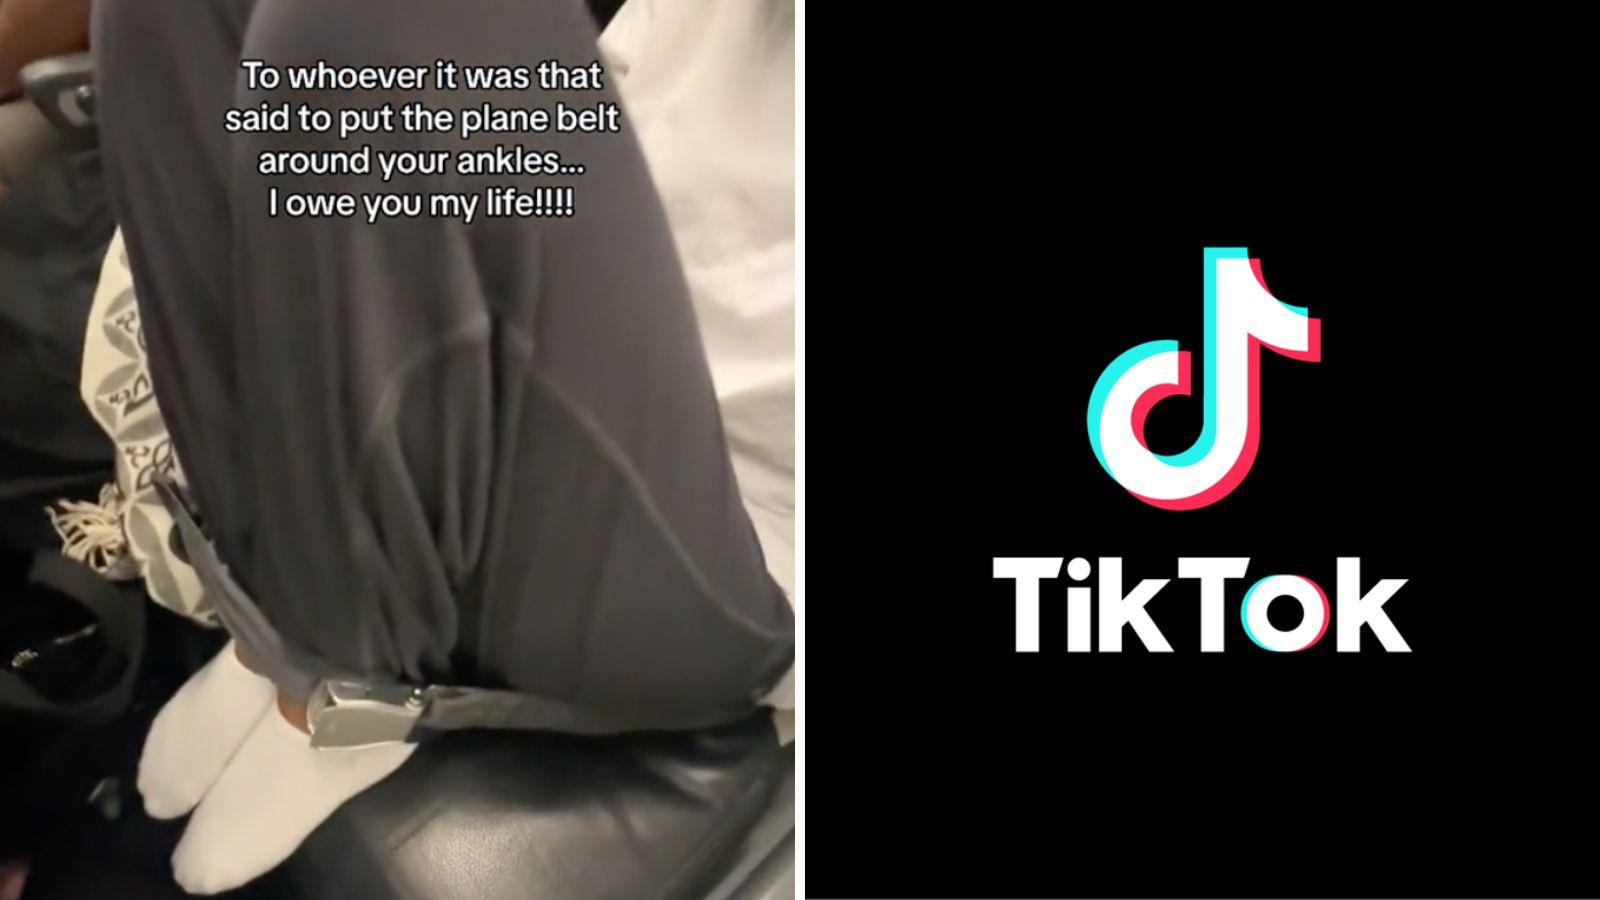 Flight experts warn against viral TikTok travel hack